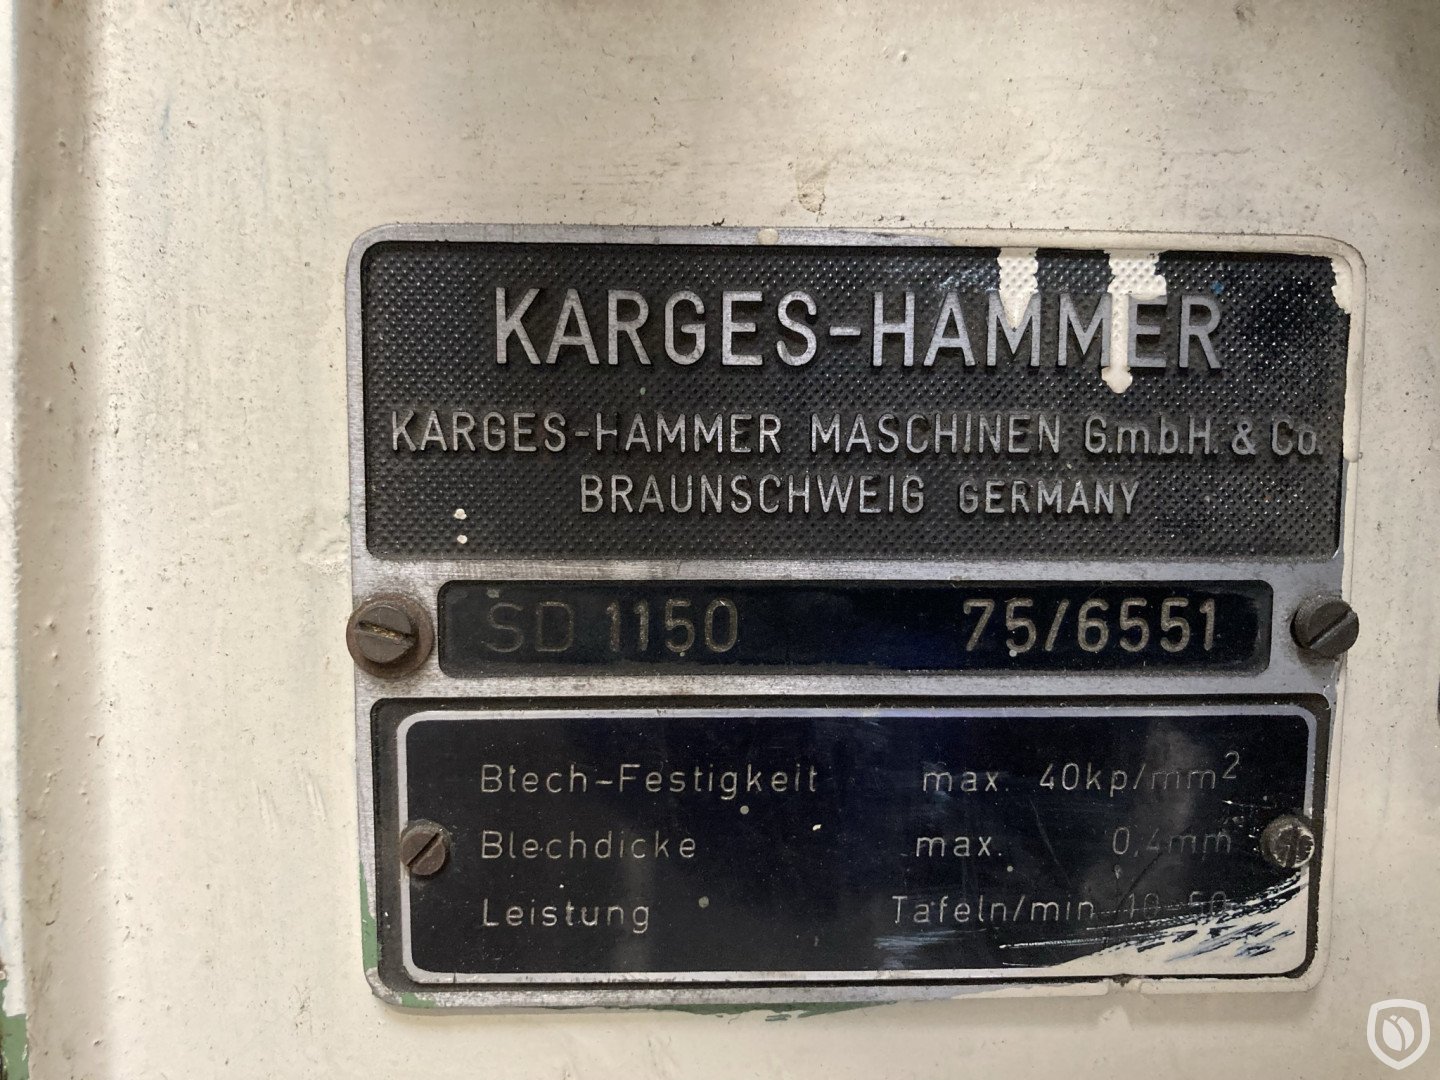 Karges Hammer SD 1150